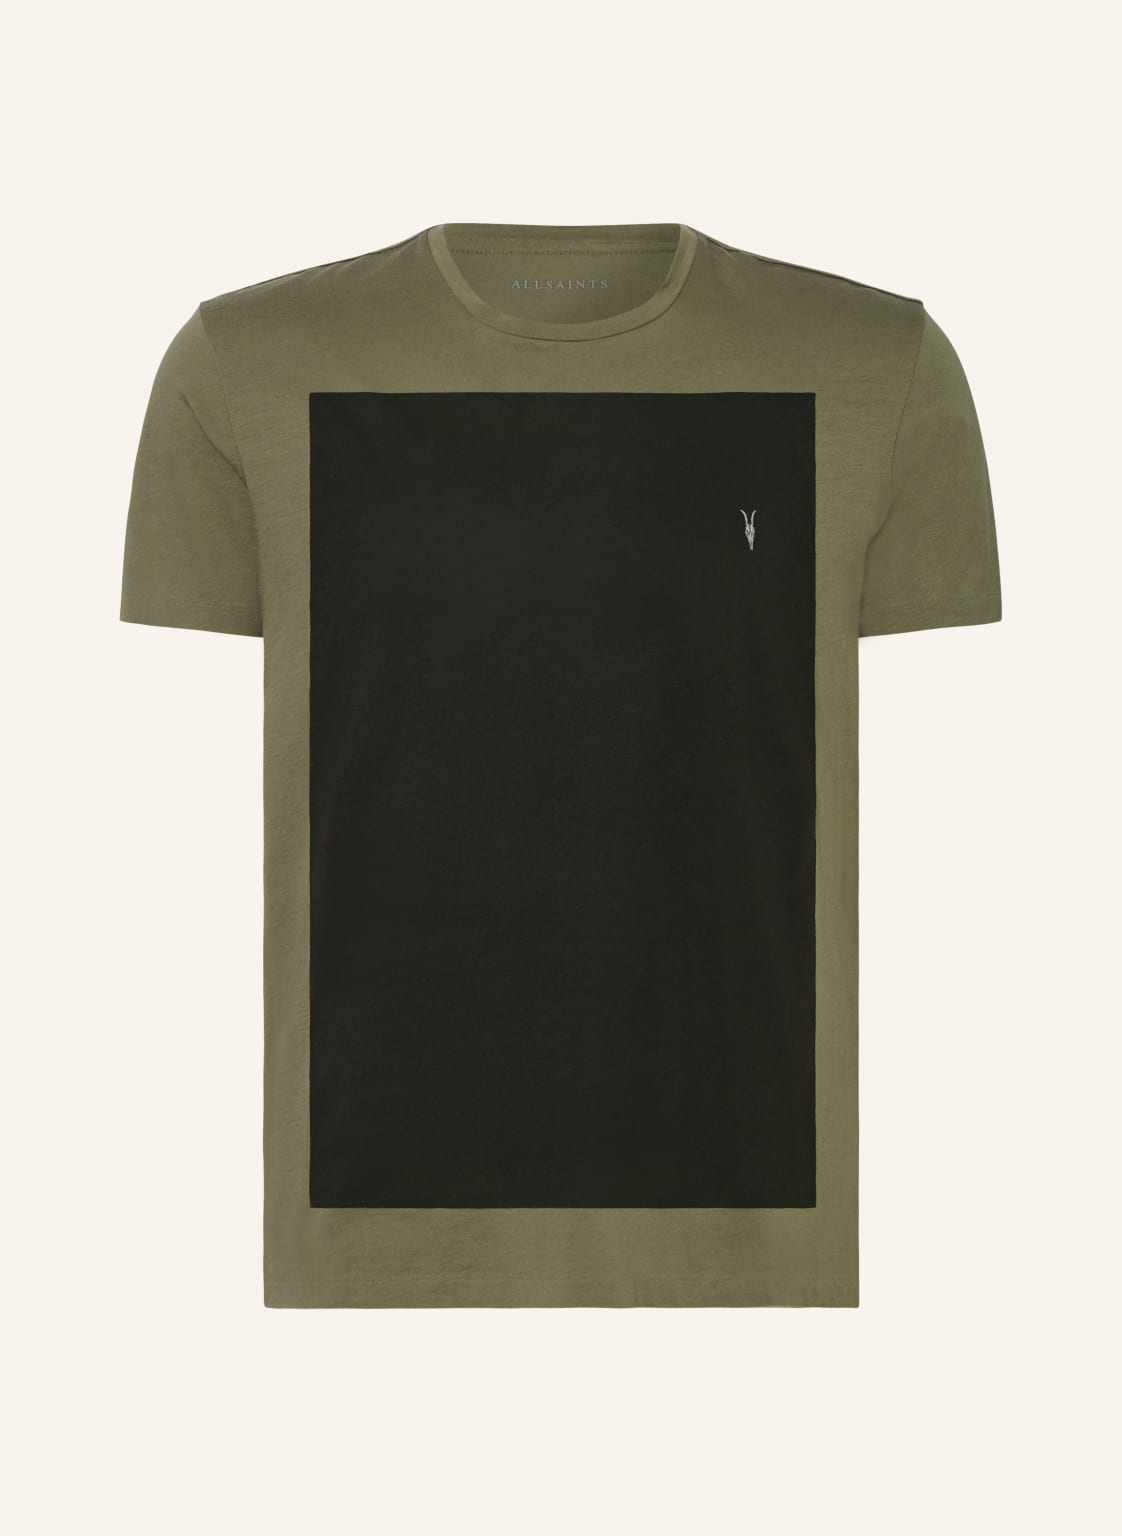 Allsaints T-Shirt Lobke gruen von AllSaints